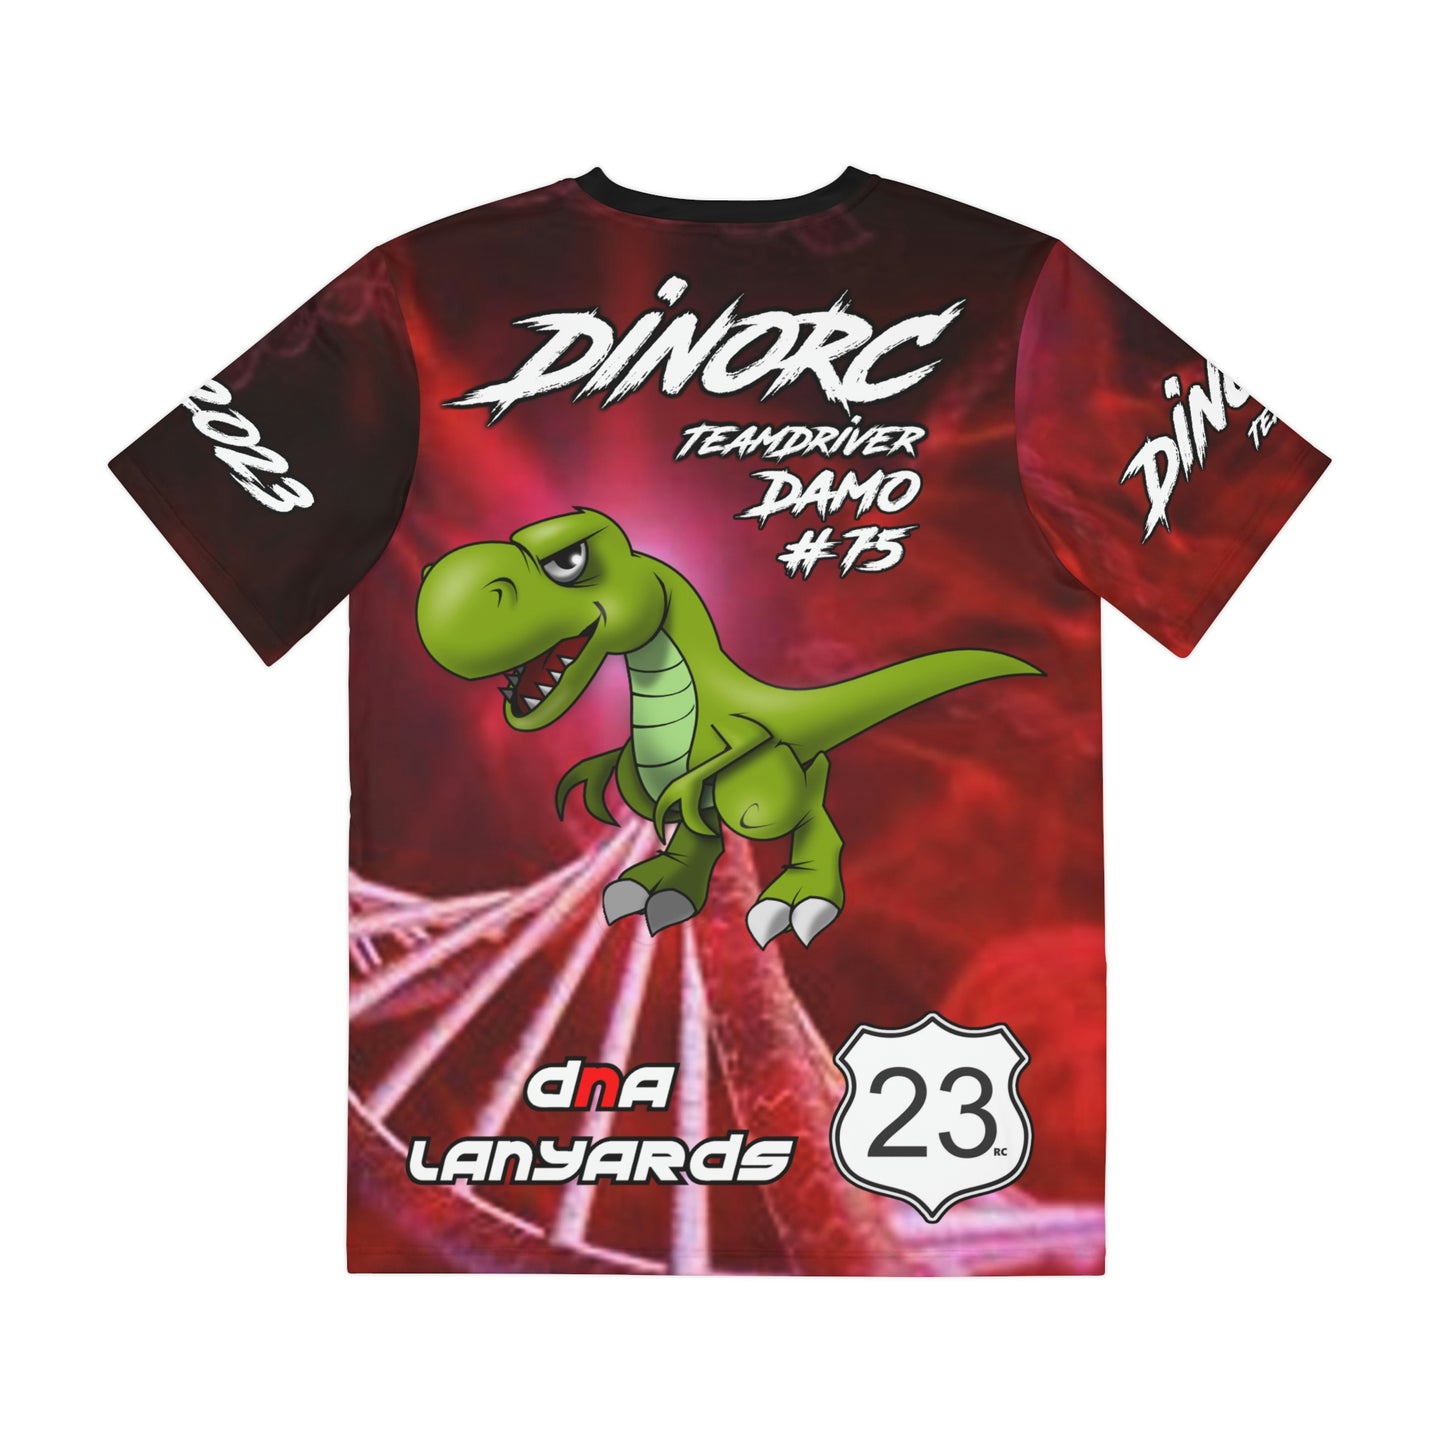 DNA Lanyards BTC Dinorc front back all white logo t shirt